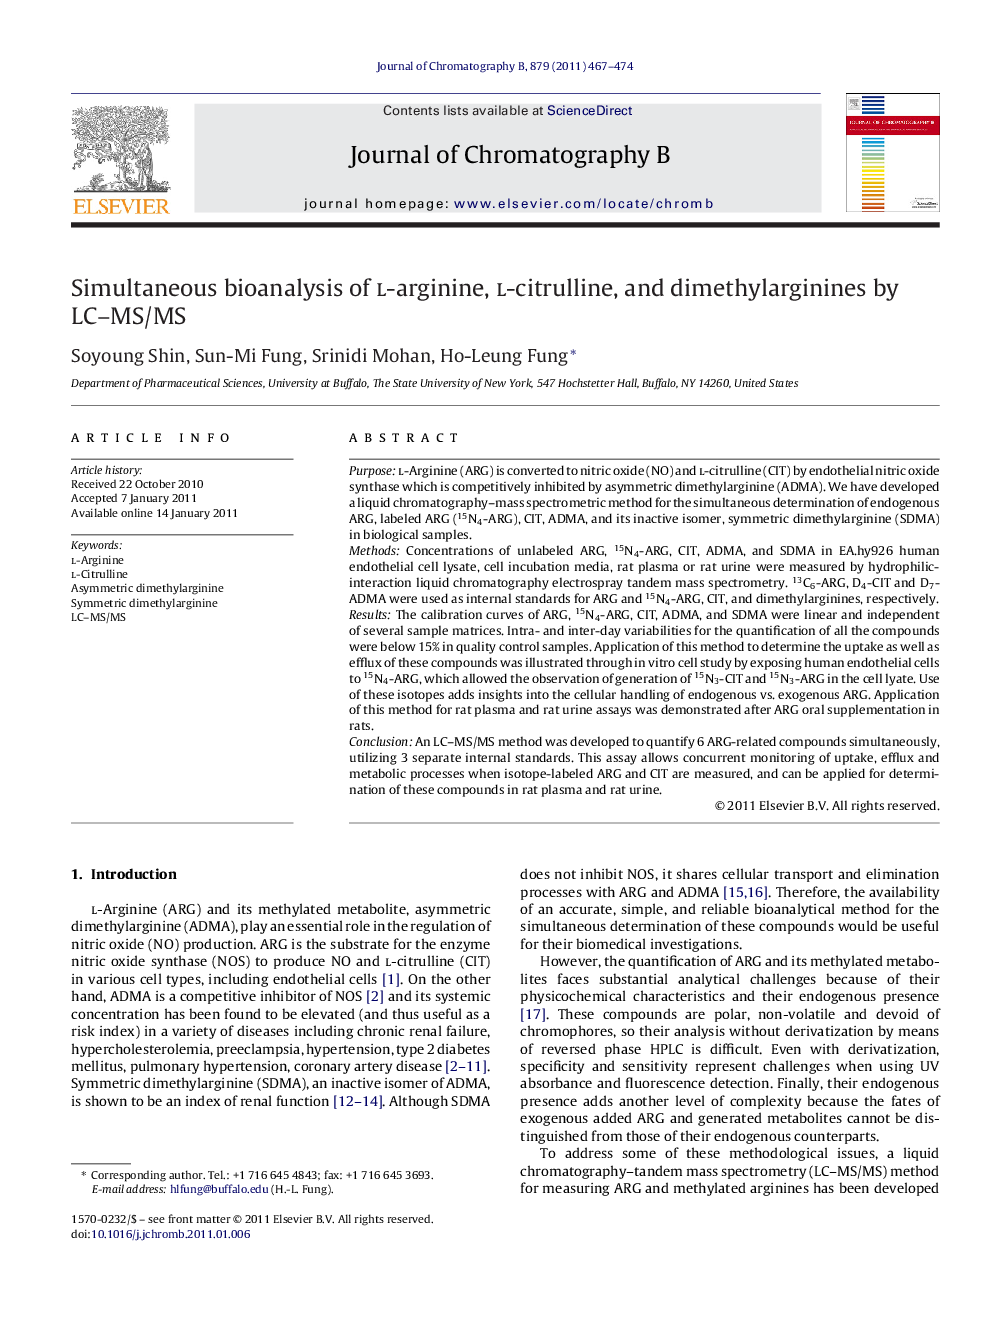 Simultaneous bioanalysis of l-arginine, l-citrulline, and dimethylarginines by LC–MS/MS